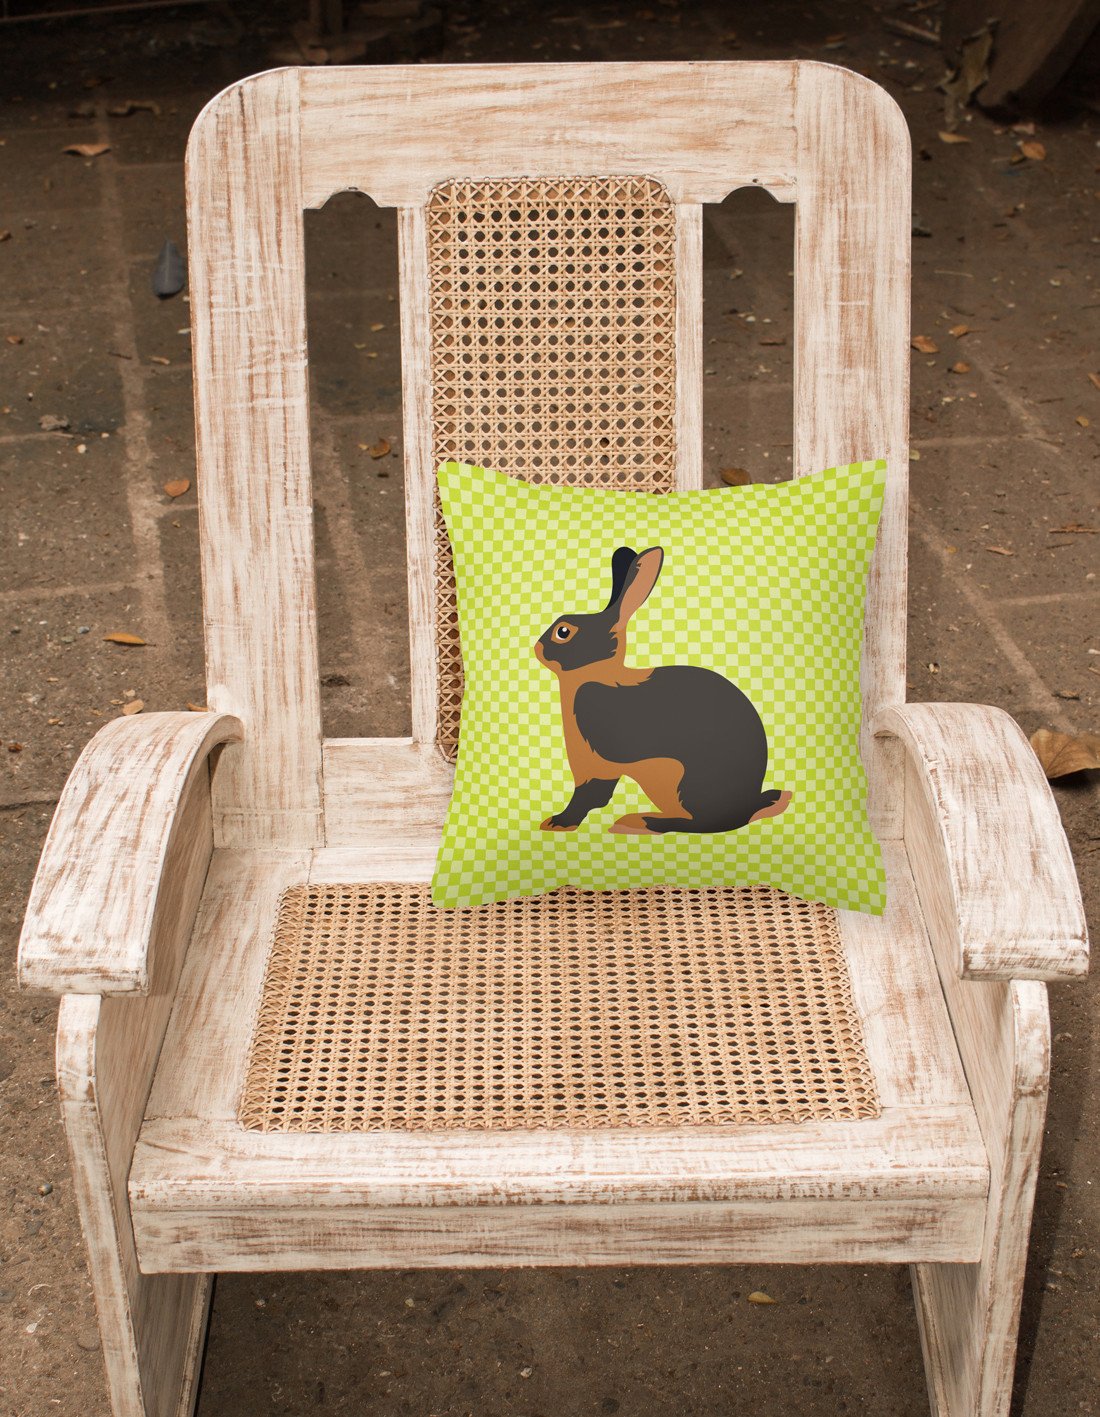 Tan Rabbit Green Fabric Decorative Pillow BB7789PW1818 by Caroline's Treasures